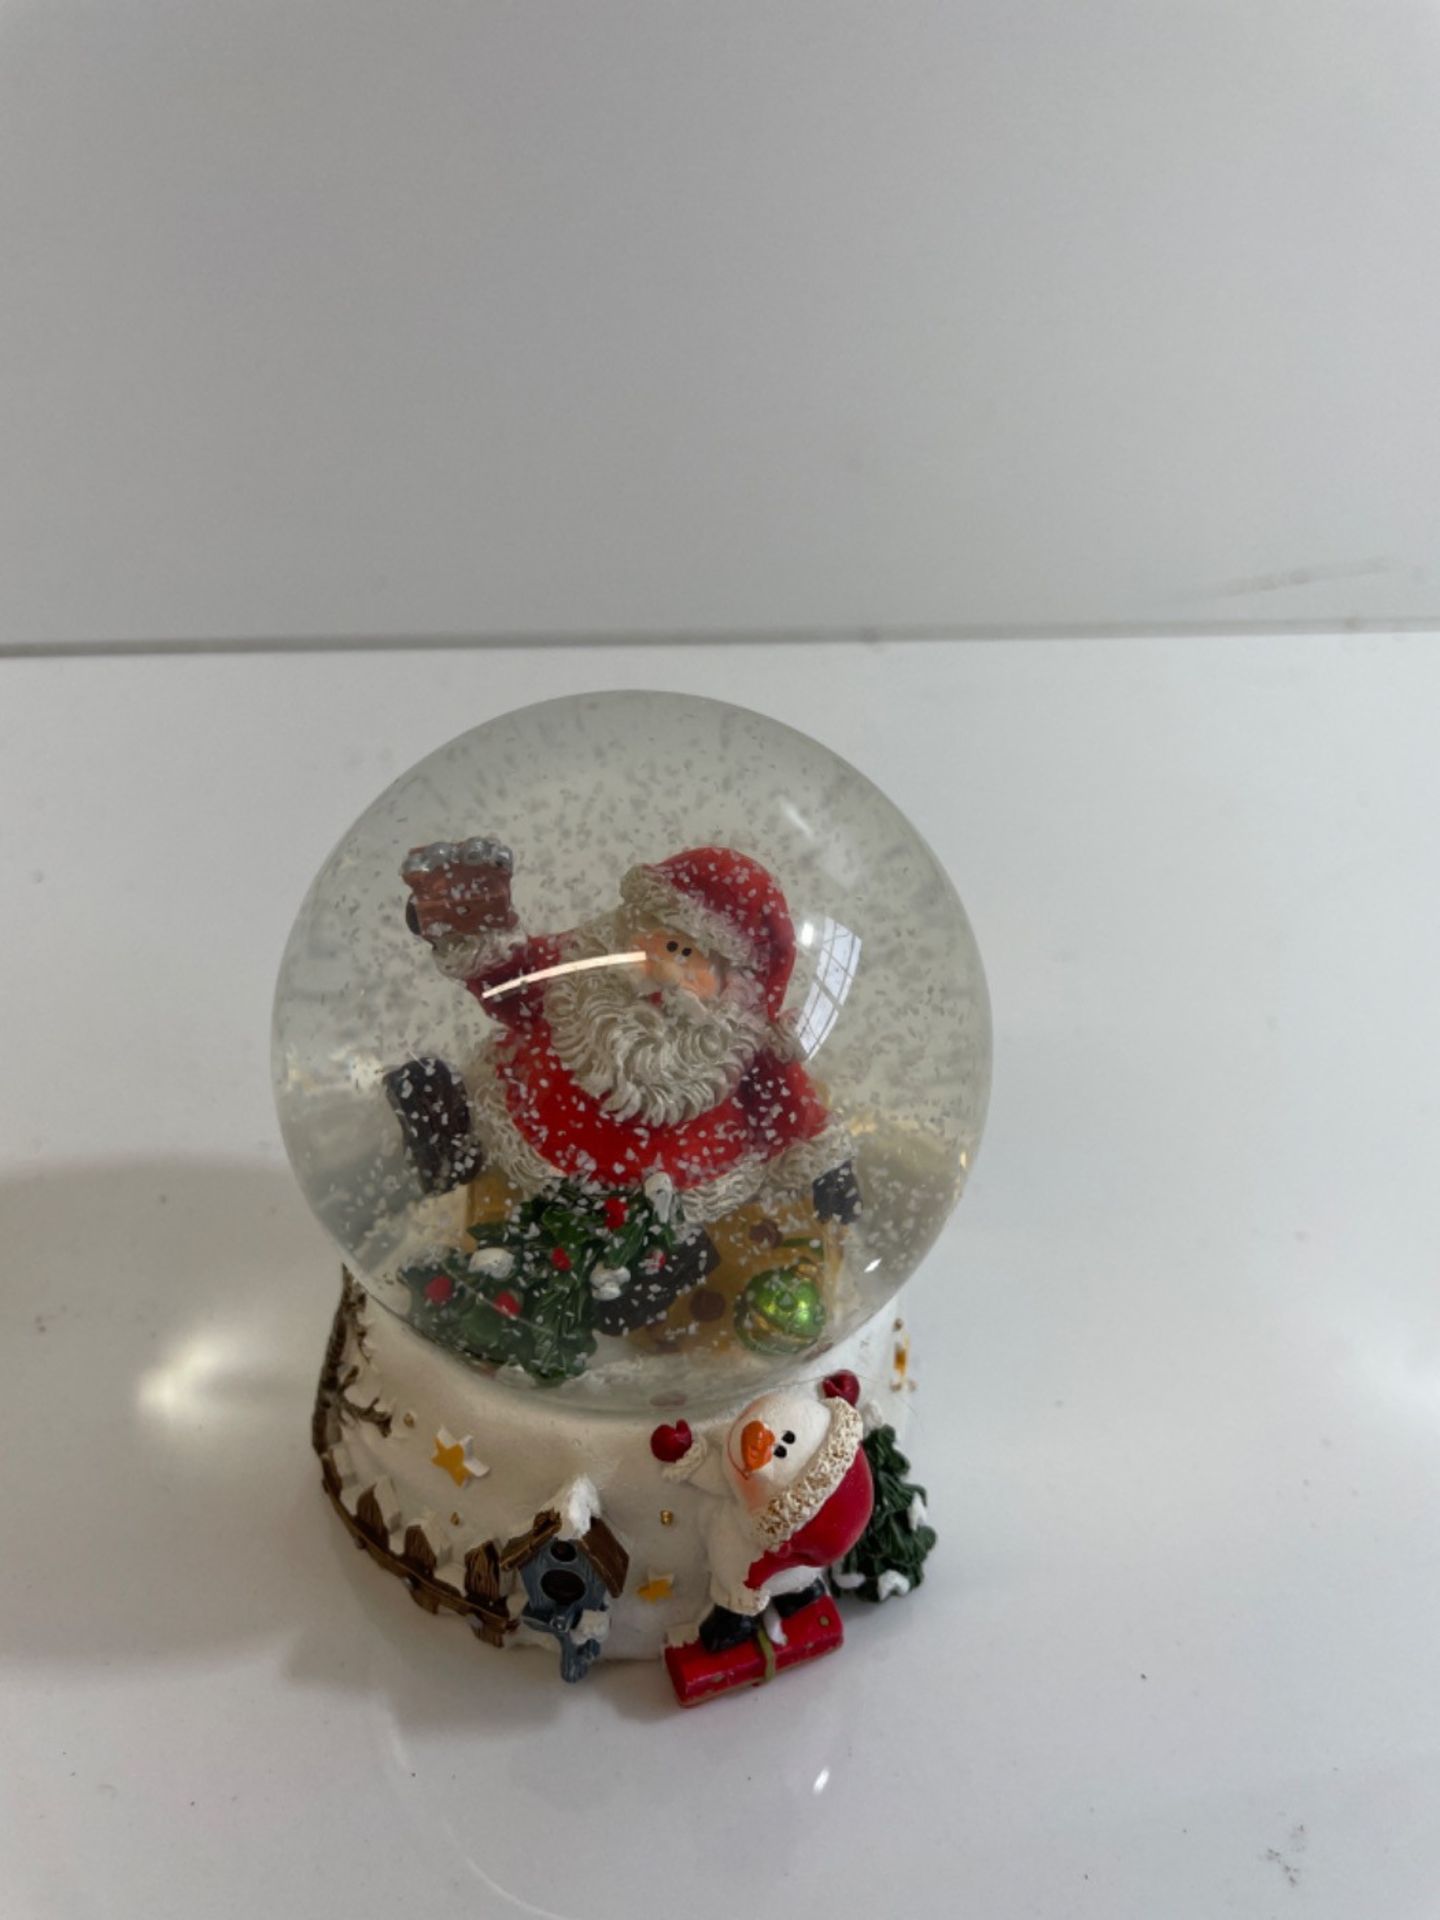 Dekohelden24 Small snow globe with Santa Claus, L/W/H 7 x 7 x 9.5 cm, ball diameter 6.5 cm. - Image 2 of 3